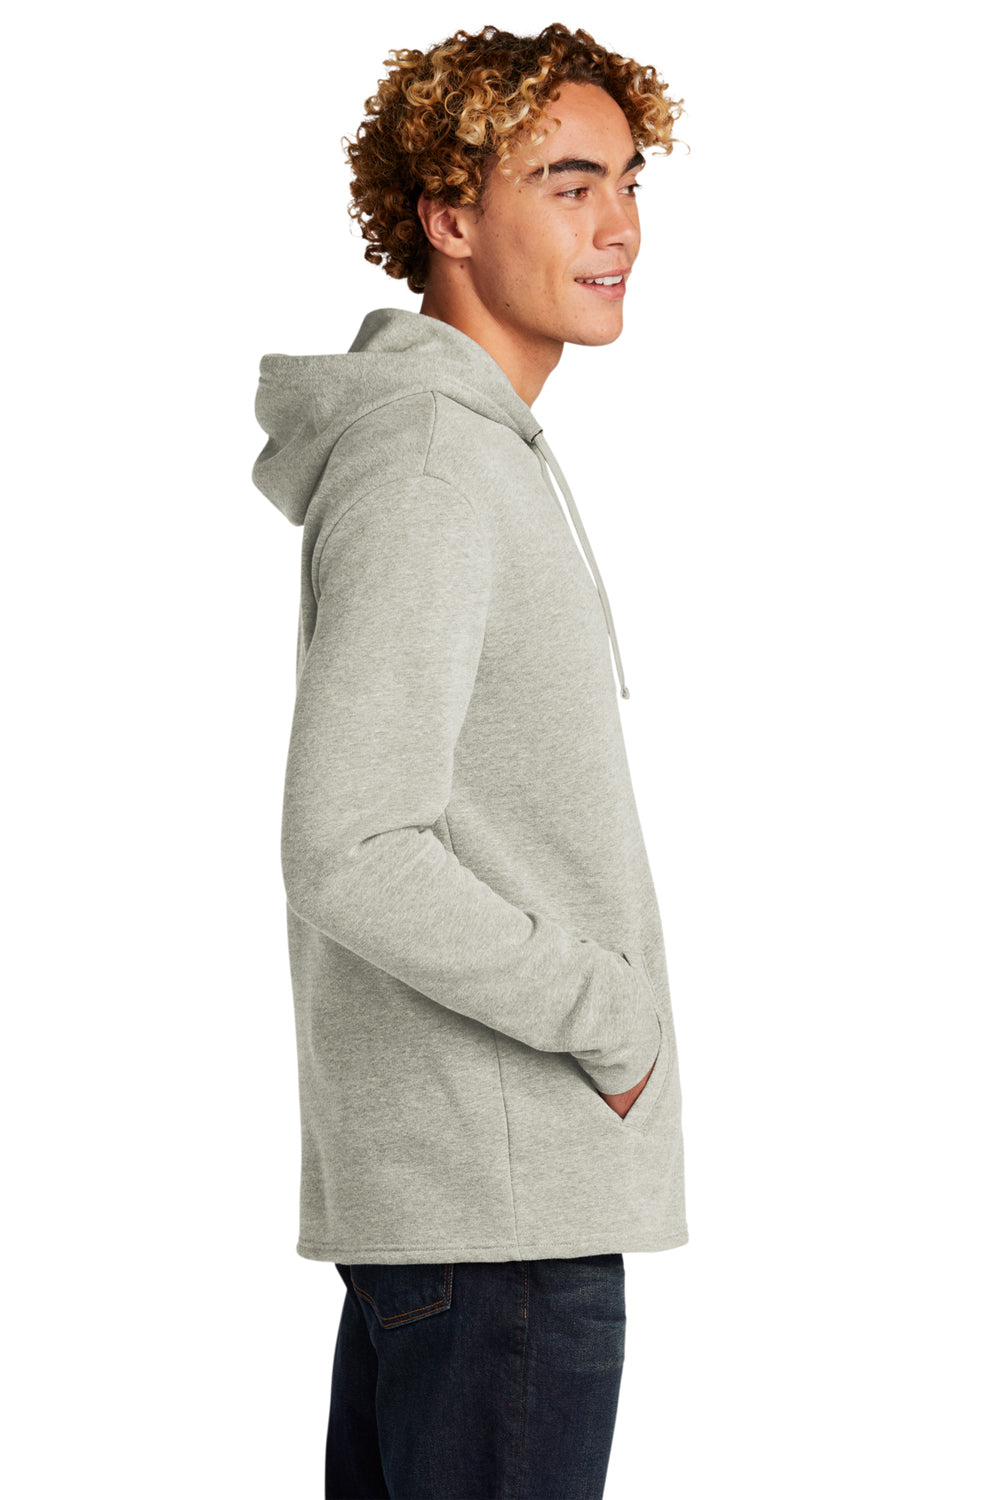 Next Level NL9300/9300 Mens PCH Fleece Hooded Sweatshirt Hoodie Oatmeal Side